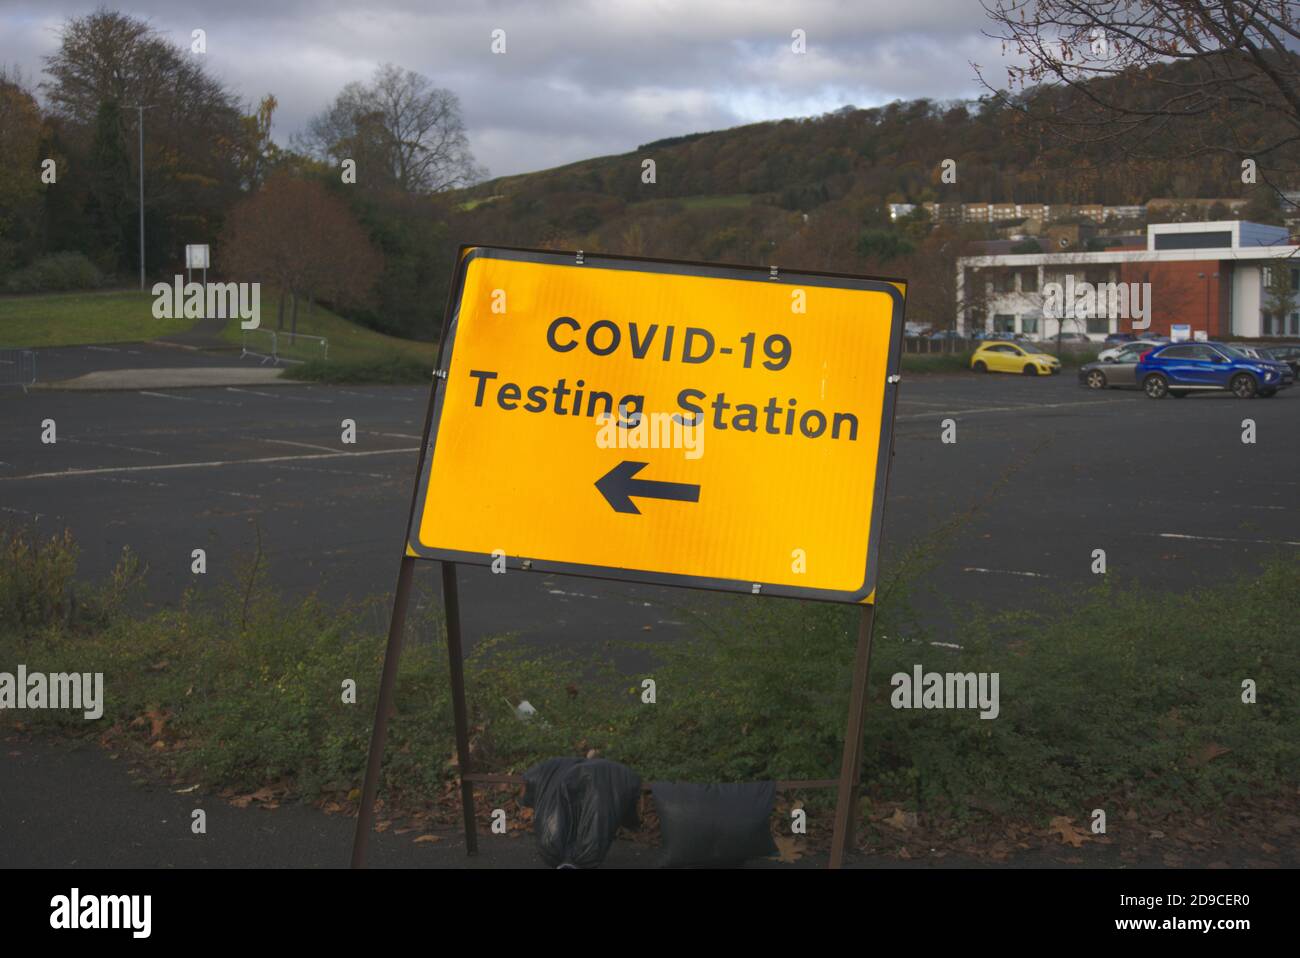 Sign indicating COVID-19 testing station during coronavirus pandemic, Heriot-Watt University Borders College campus, Galashiels, Scottish Borders, UK. Stock Photo